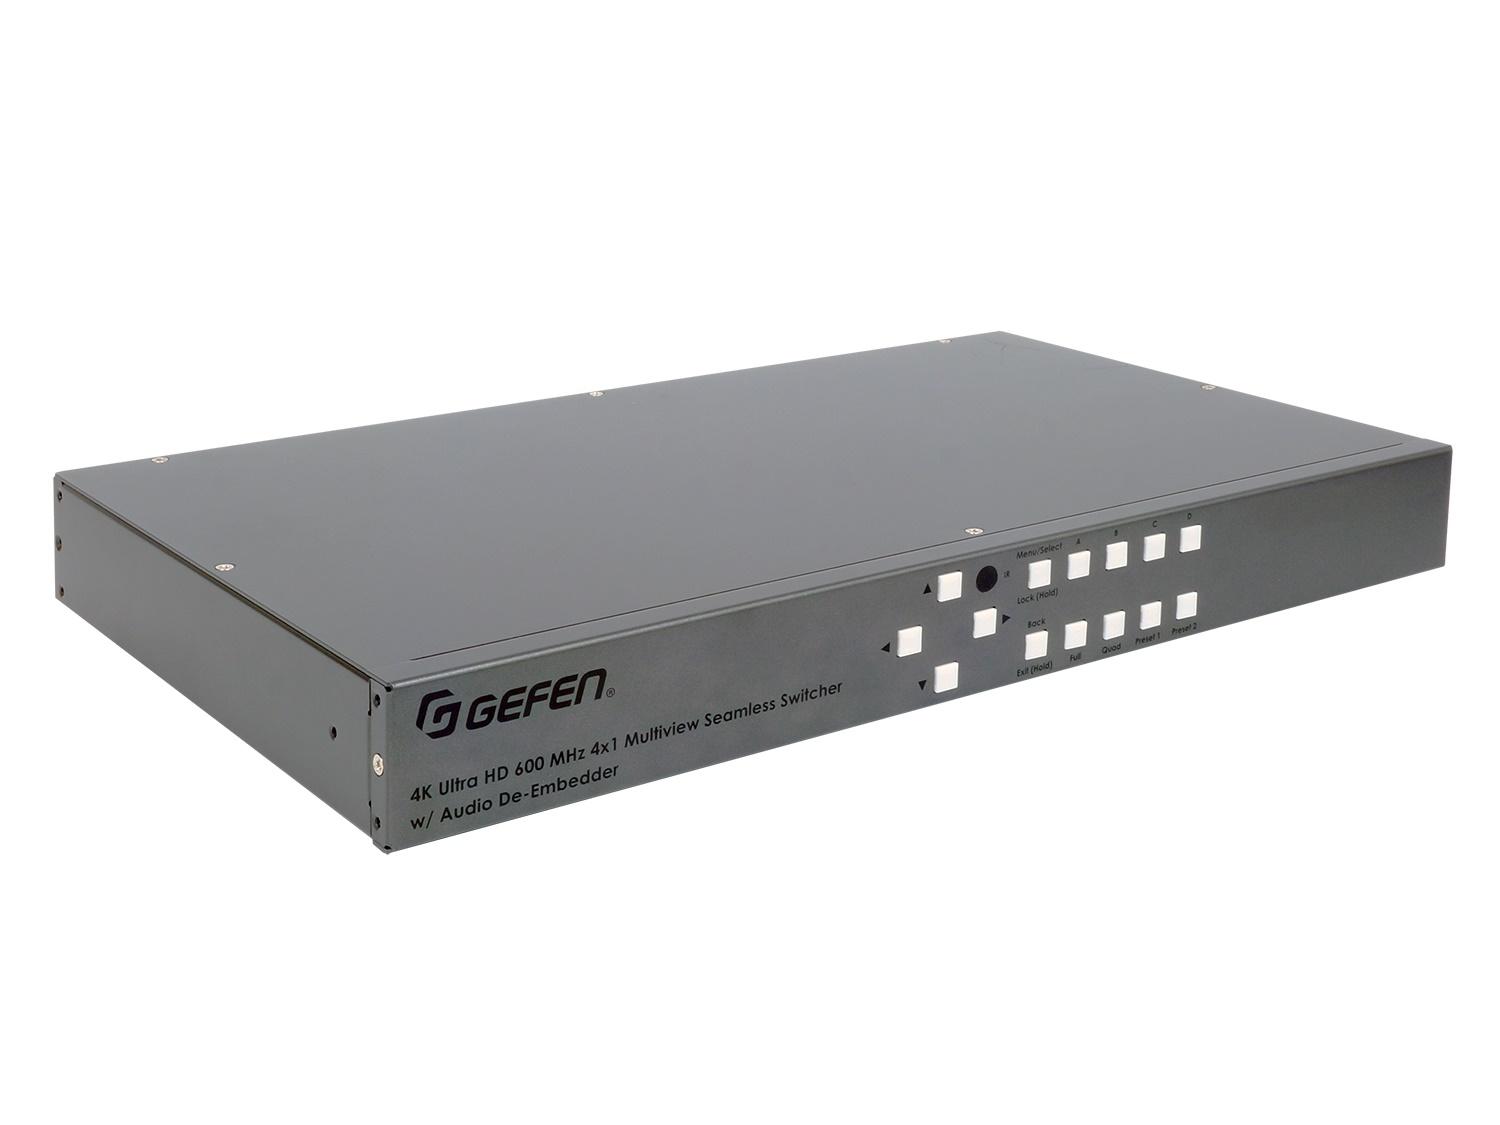 EXT-UHD600A-MVSL-41 4K Ultra HD 600 MHz 4x1 Multiview Seamless Switcher with Audio De-Embedder by Gefen